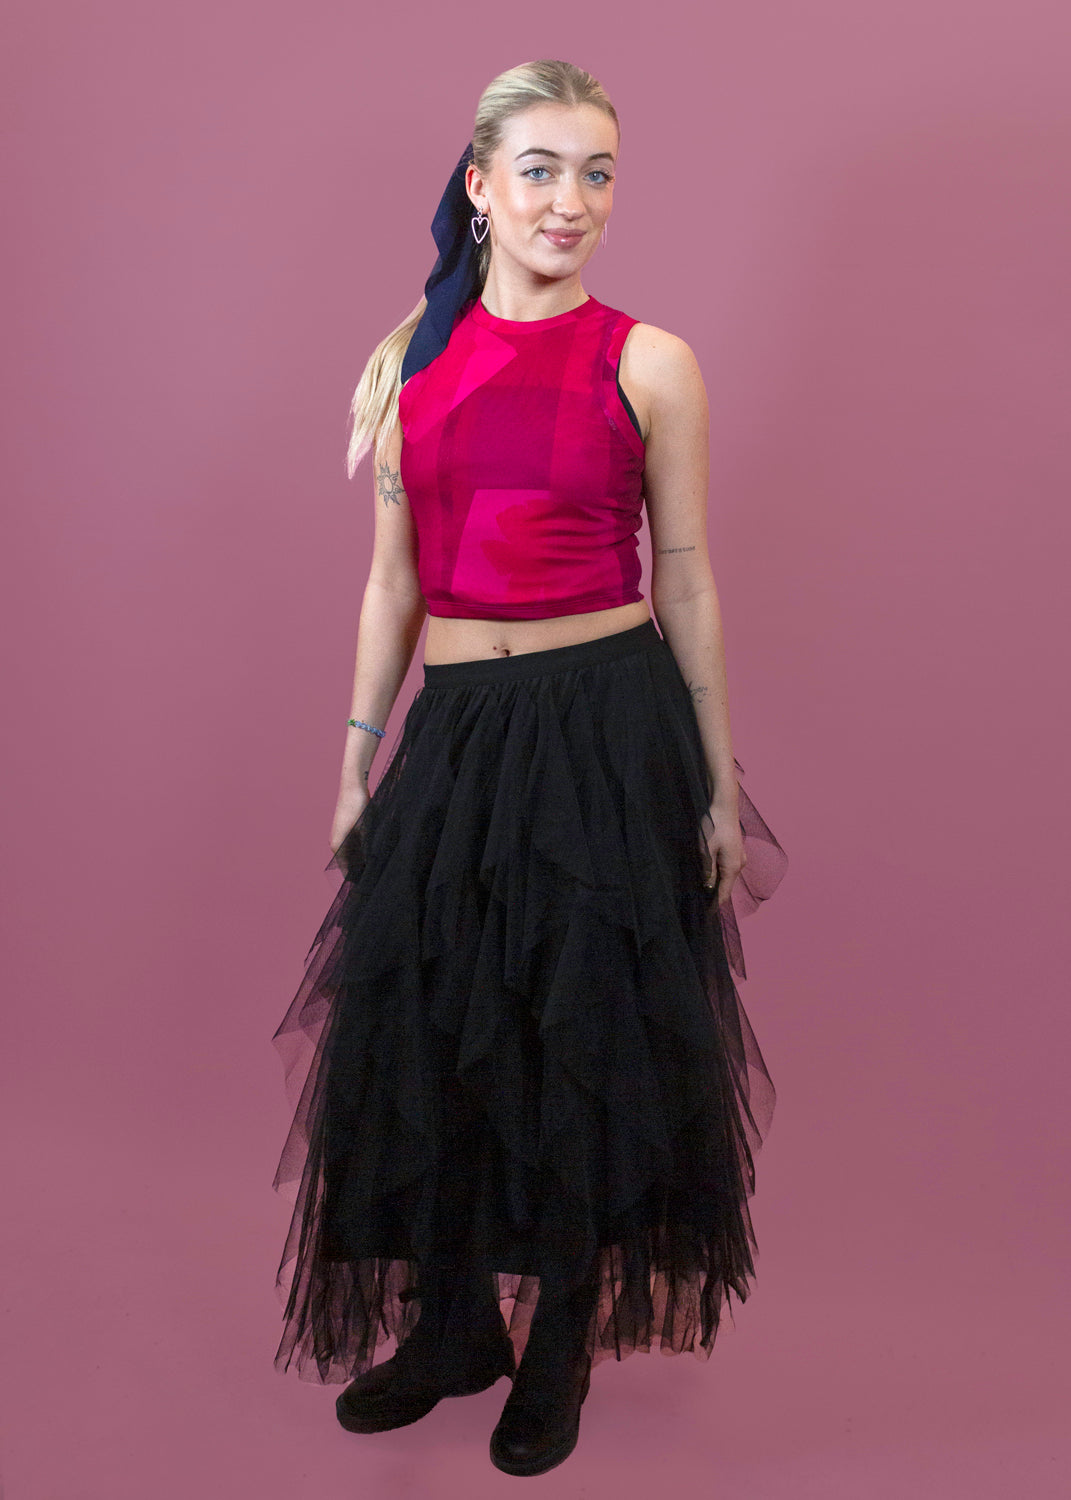 The Edit - Black Layered Tulle Mesh Skirt